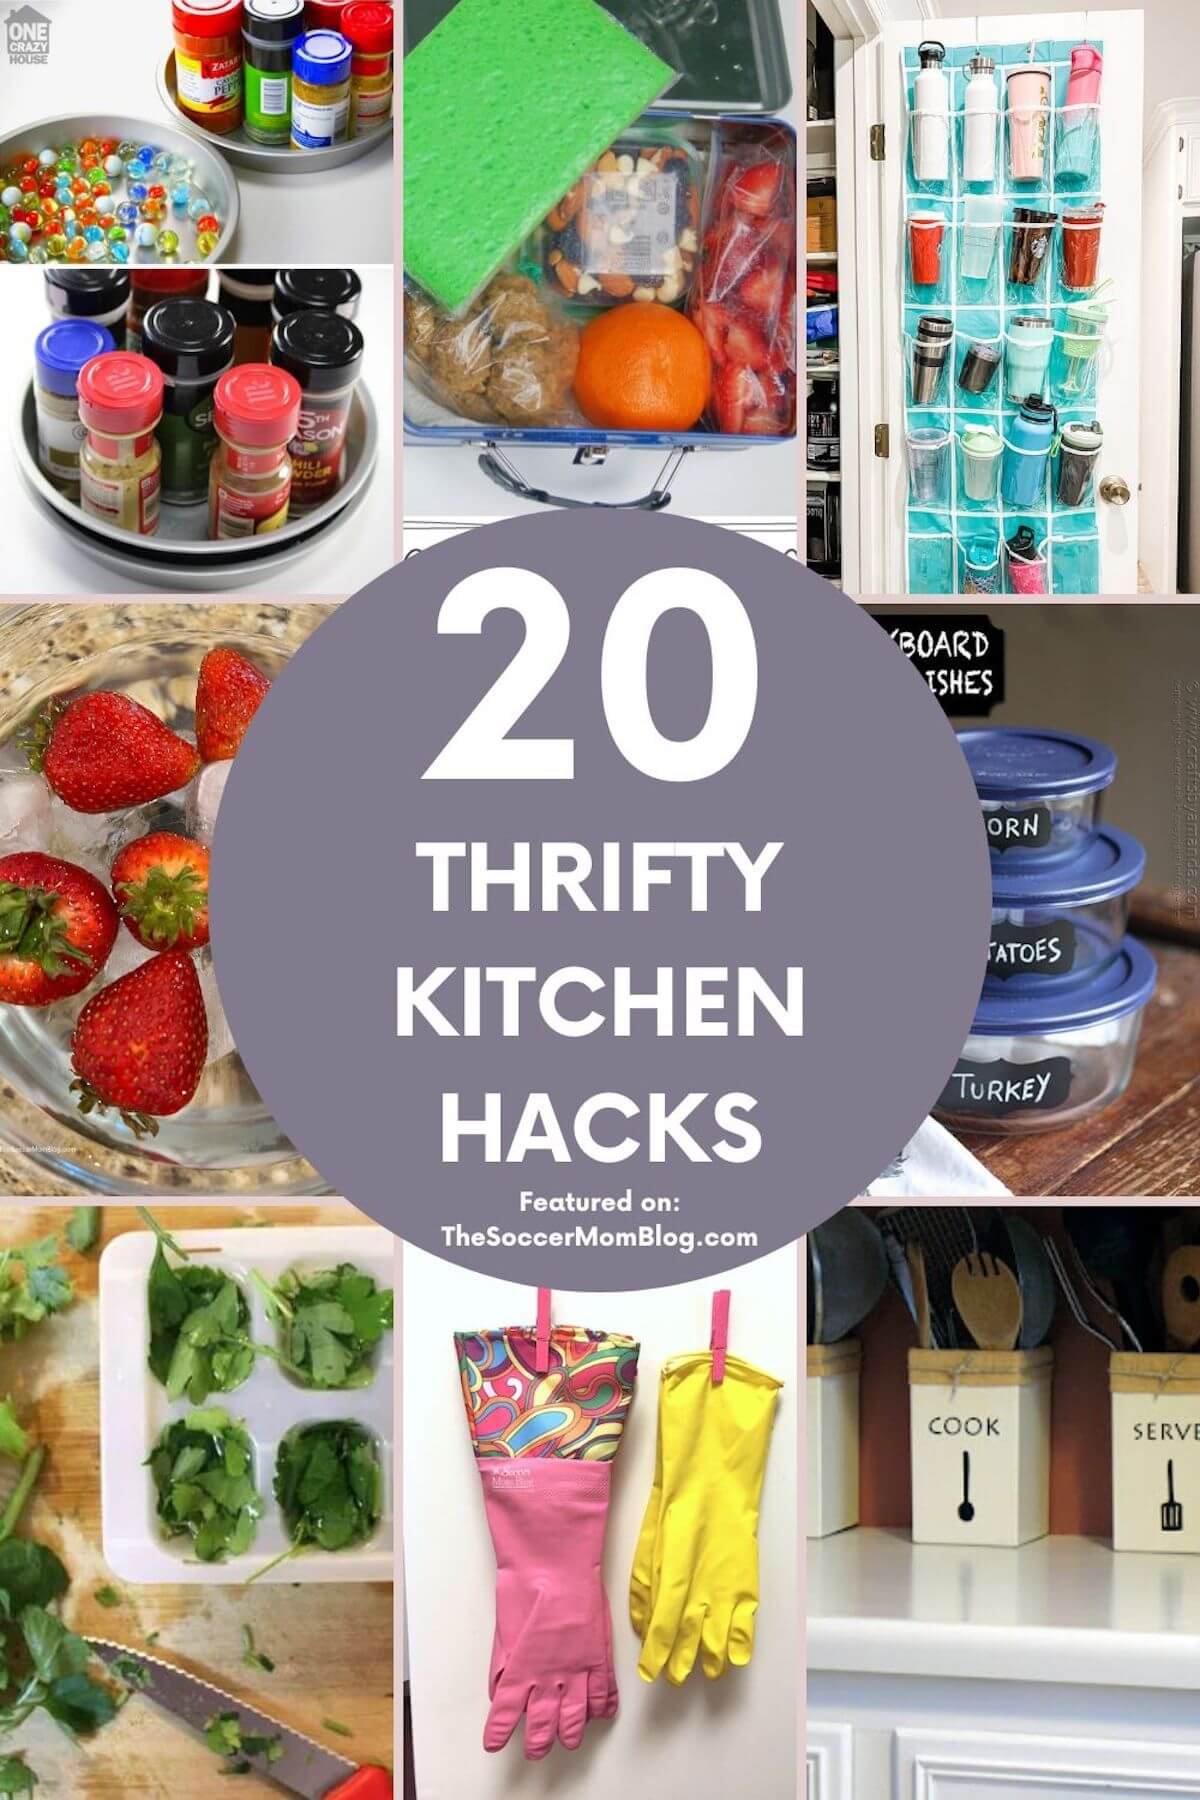 Pinterest collage of kitchen hacks